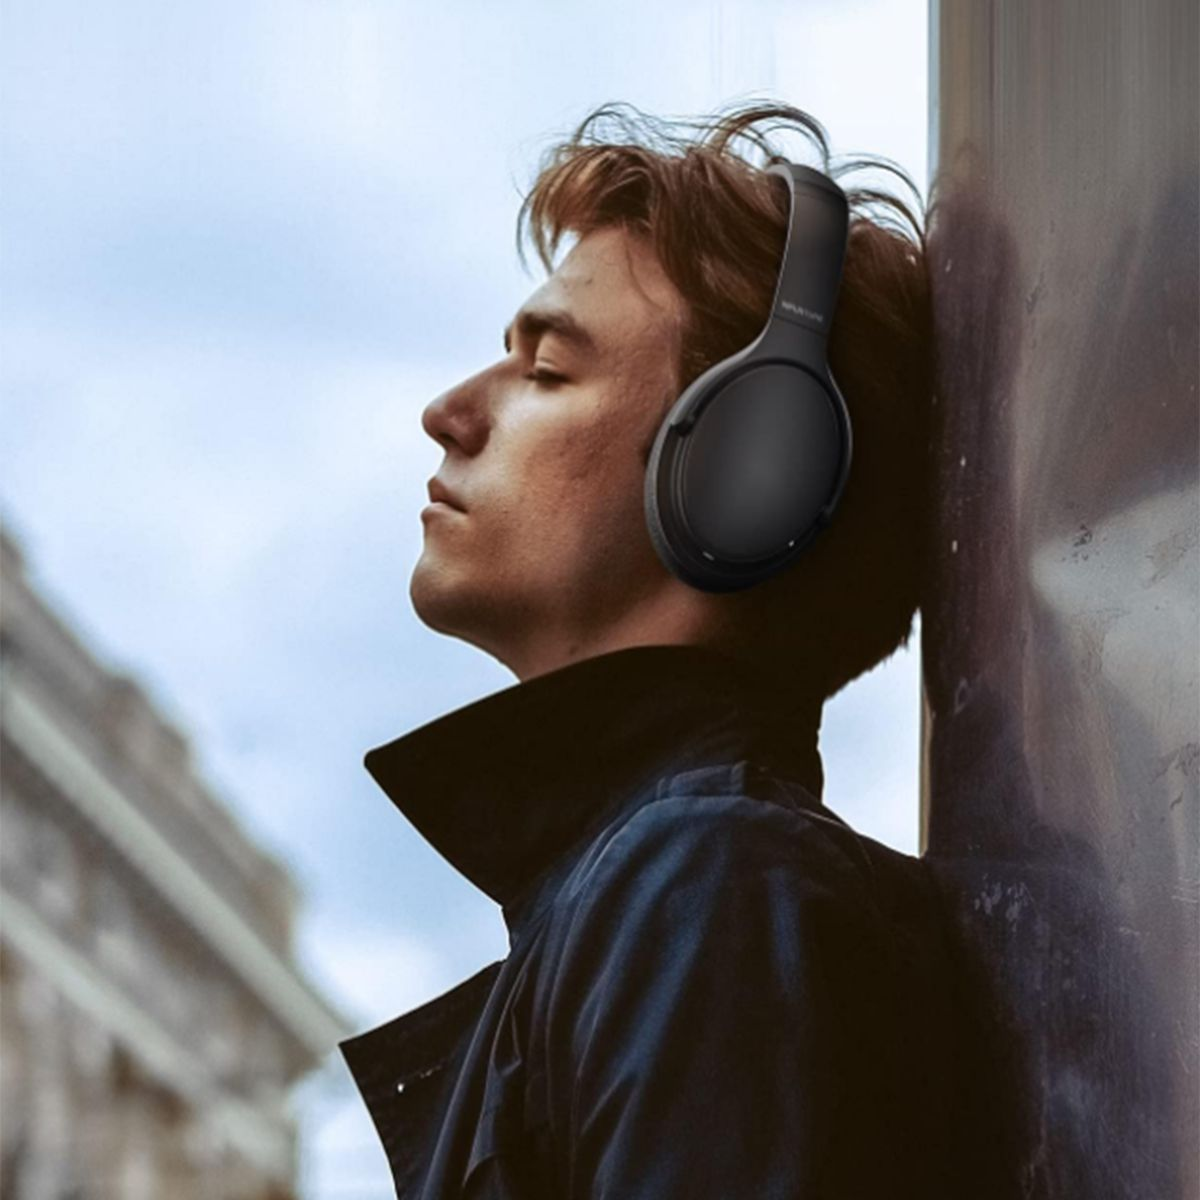 Bluetooth-Headset, Bluetooth KINSI wireless kabelgebunden/drahtlos Kopfhörer, Kopfhörer grau Over-ear Geräuschunterdrückung,